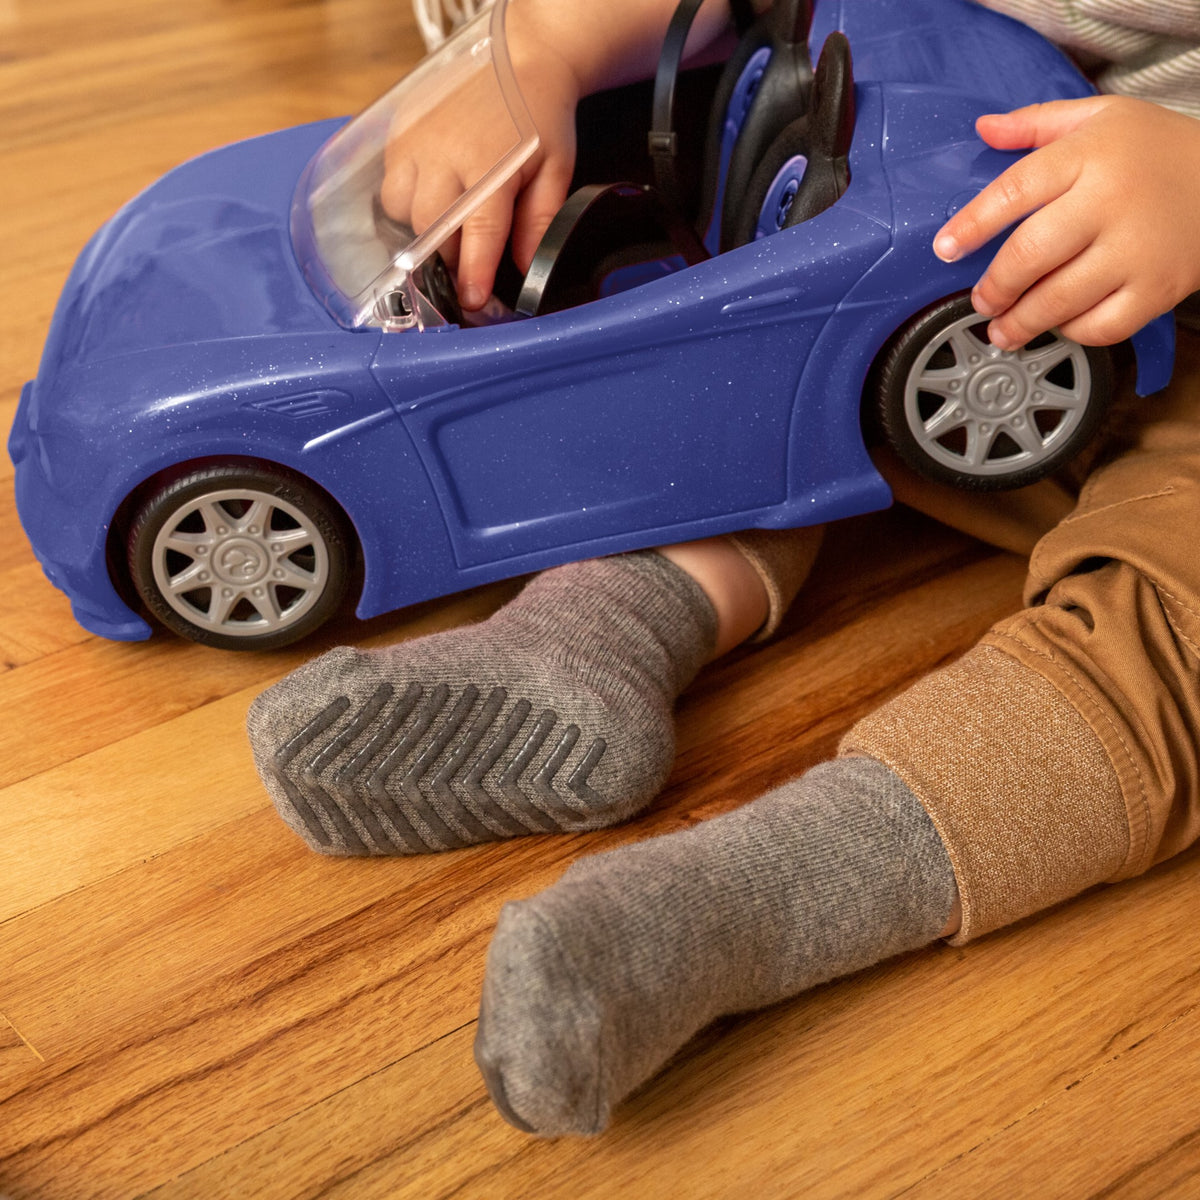 Black Grip Socks for Toddlers &amp; Kids - 4 pairs - Gripjoy Socks